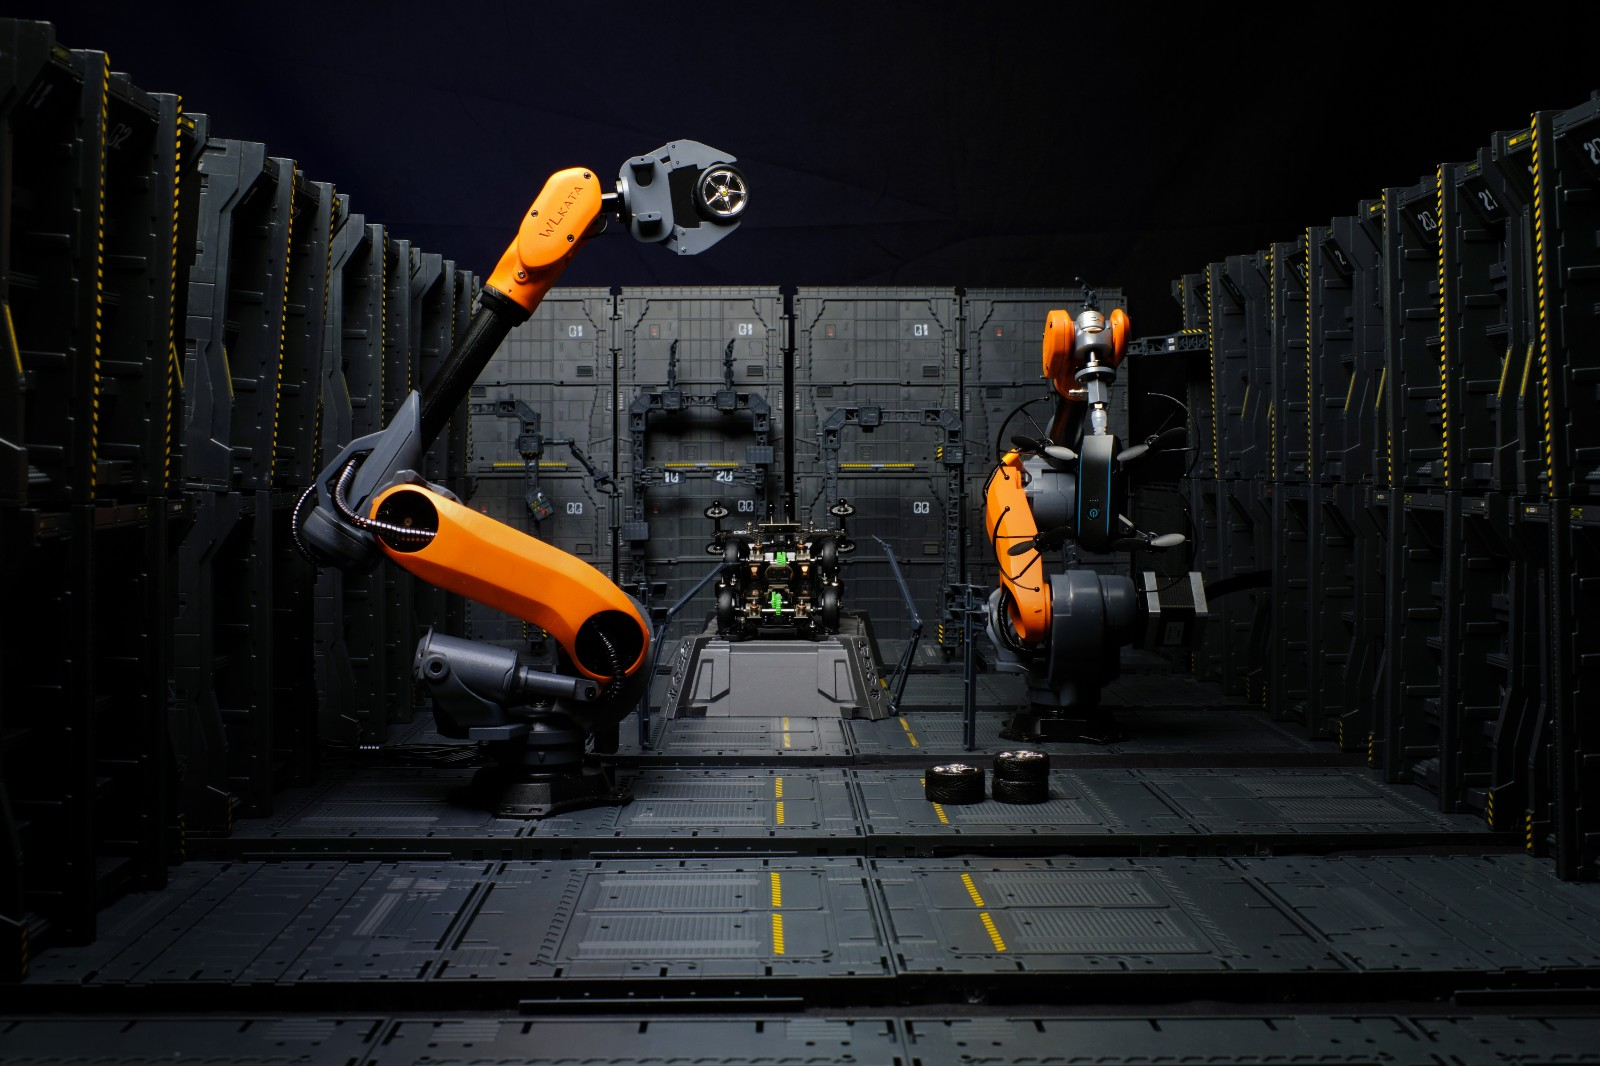 Mirobot Is A Mini Industrial Robot Arm Built To Assist You